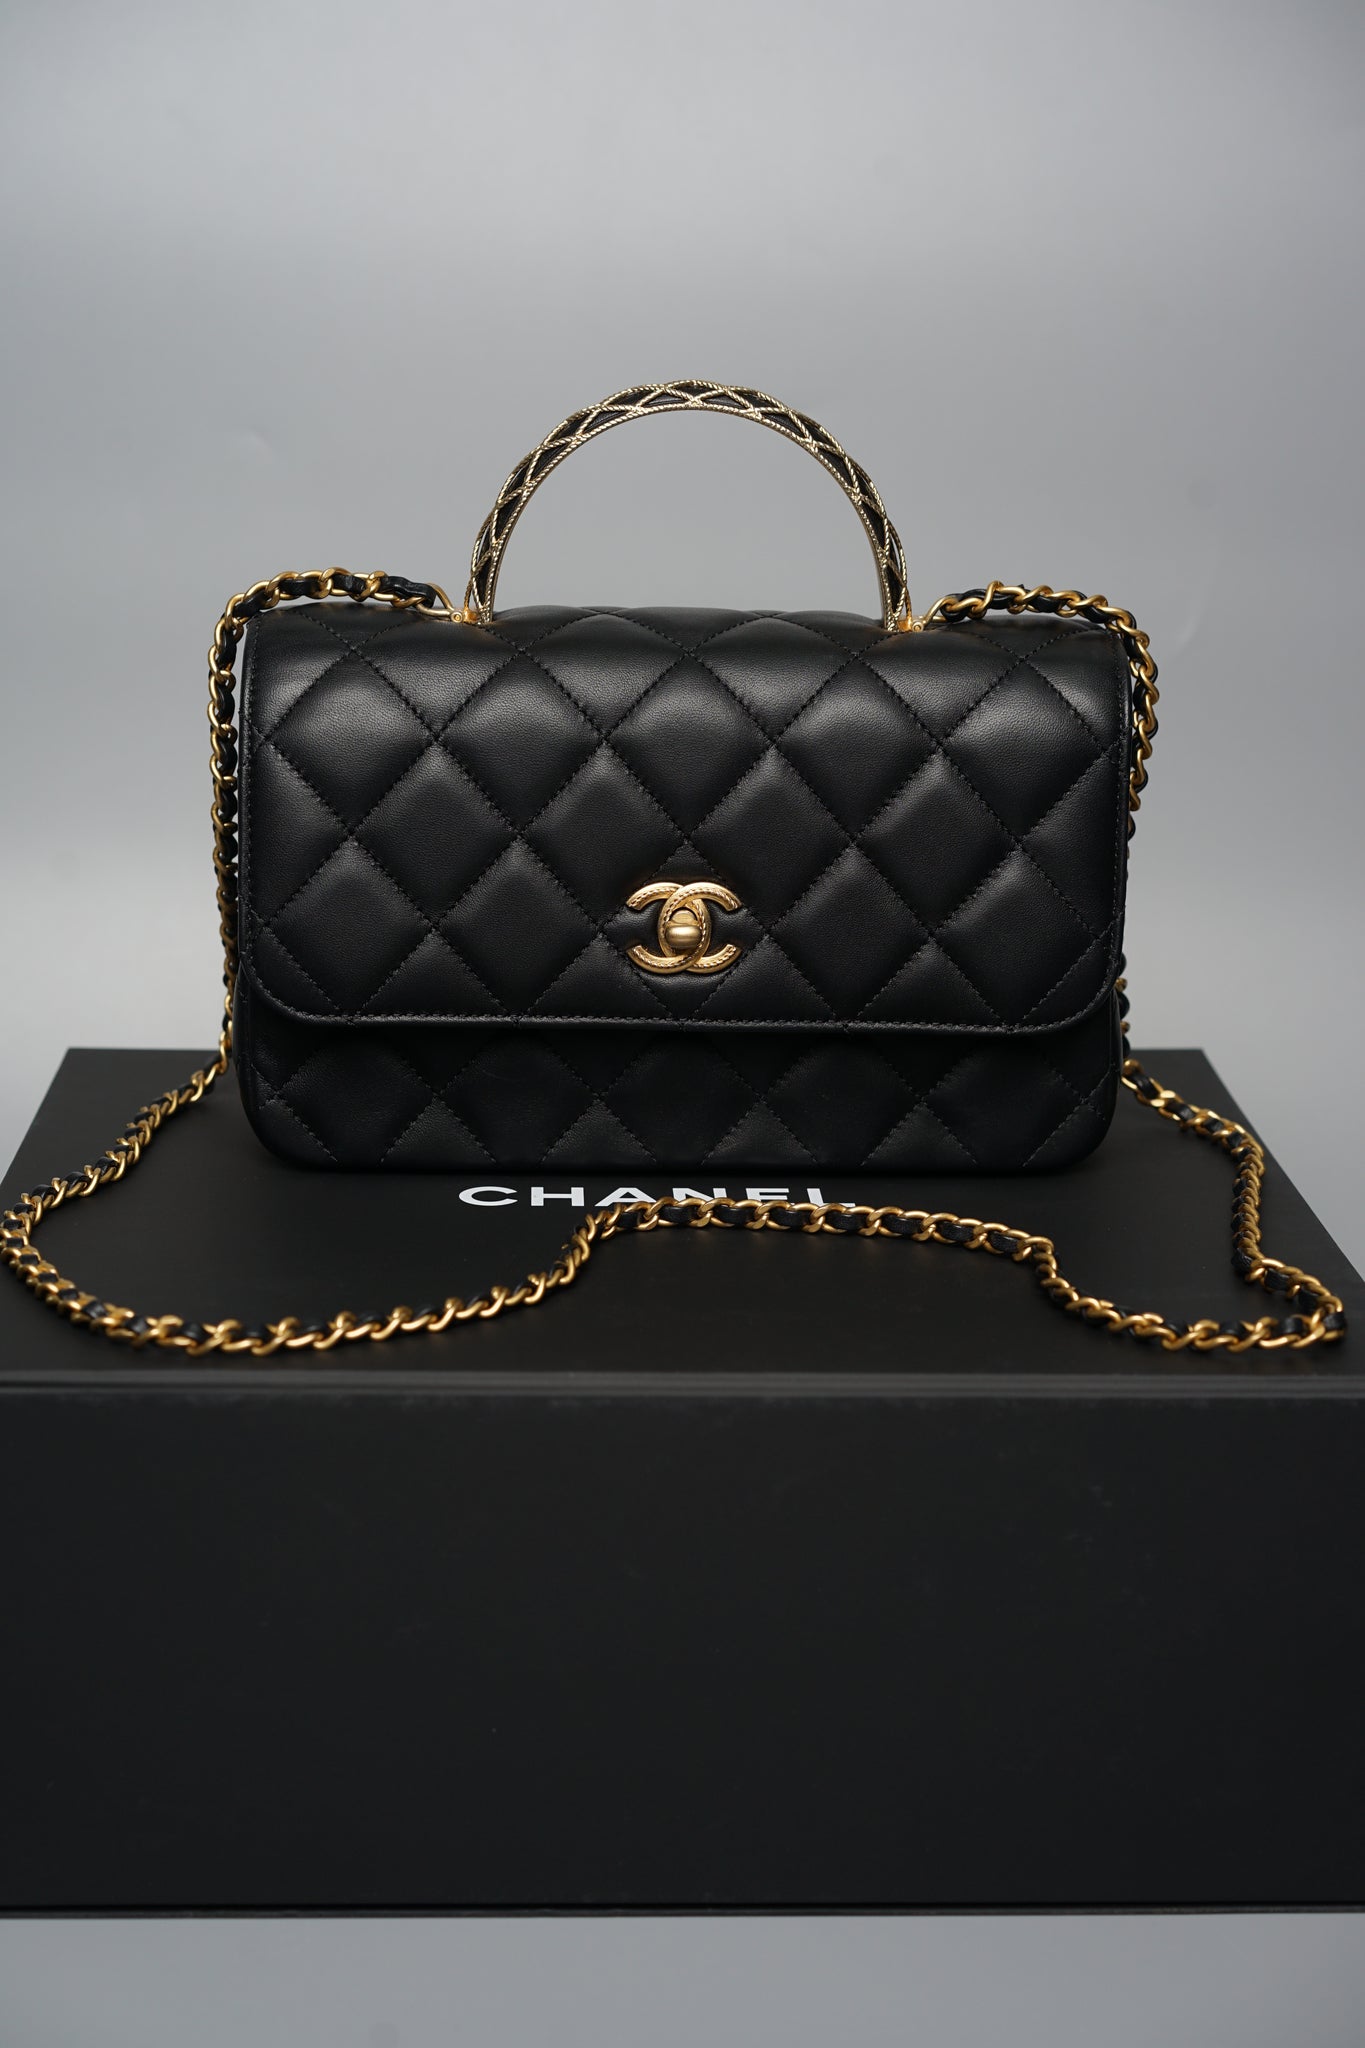 Chanel Seasonal Top Handle in Black Bghw (Brand New)